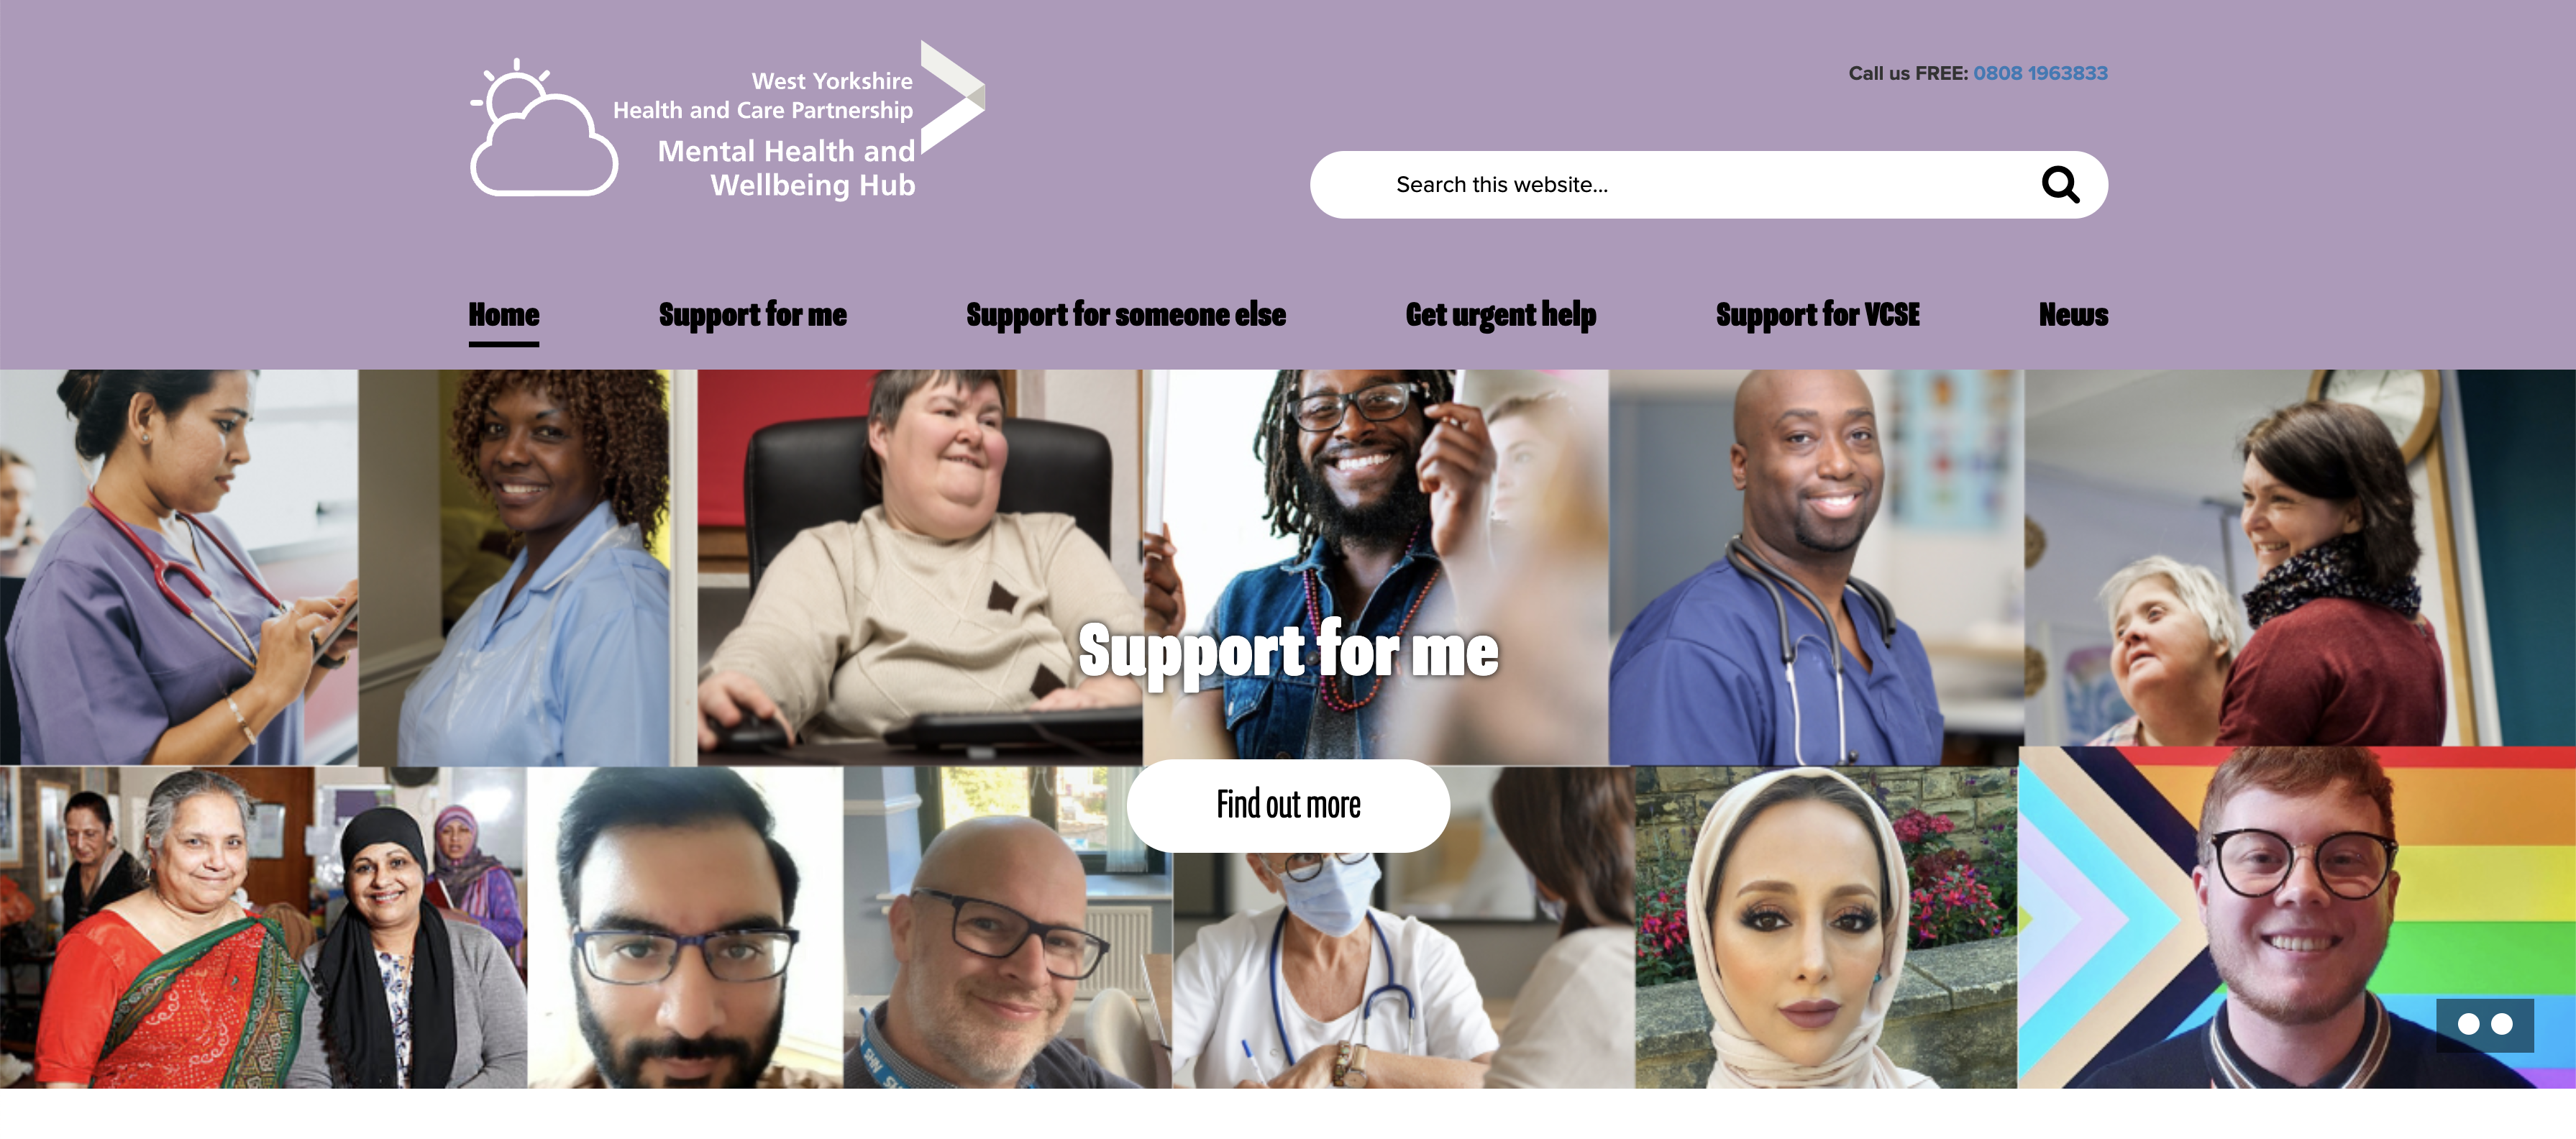 WY Mental health and wellbeing hub website